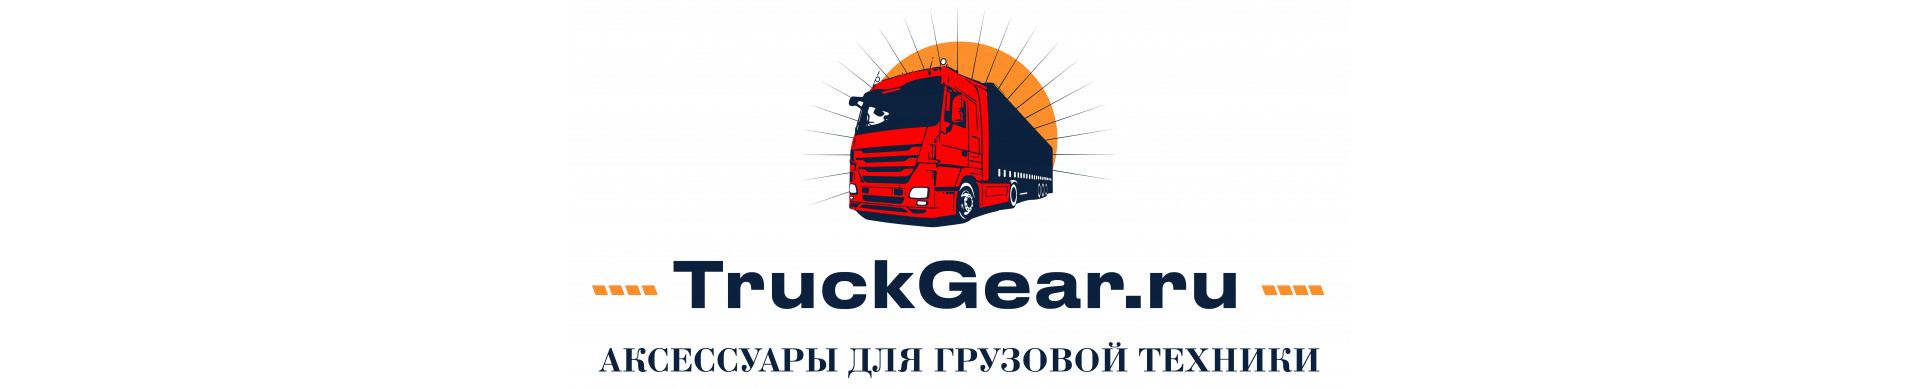 TuckGear Аксессуары для грузовой техники